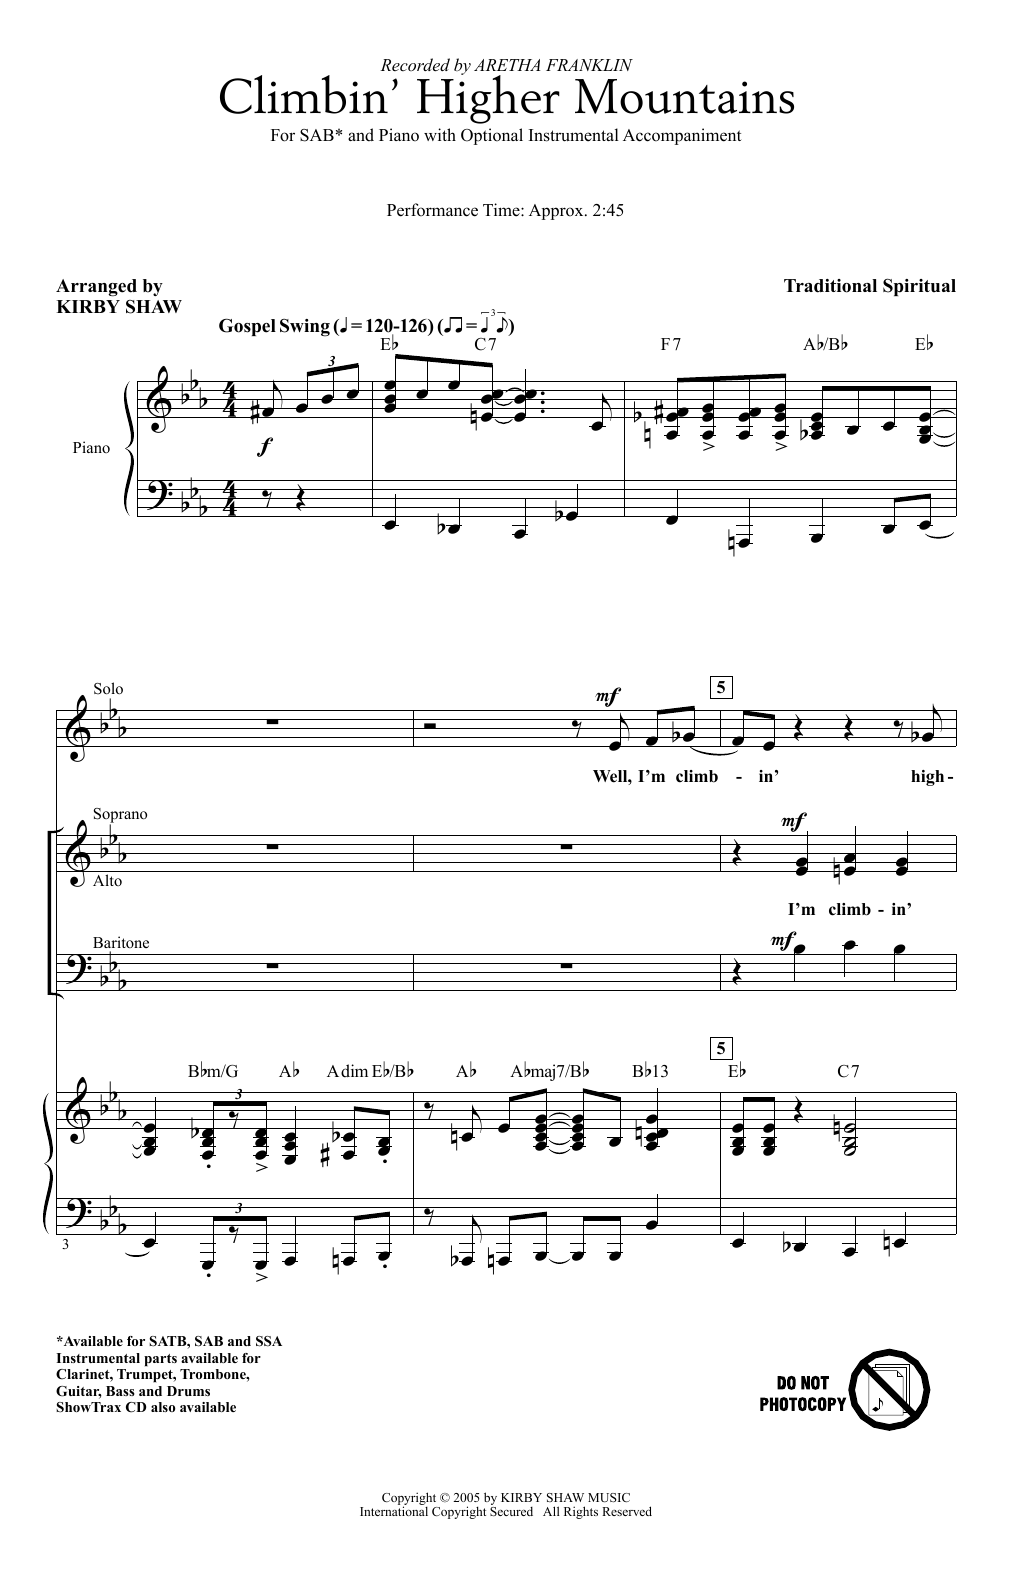 Aretha Franklin Climbin' Higher Mountains (arr. Kirby Shaw) Sheet Music Notes & Chords for SATB Choir - Download or Print PDF